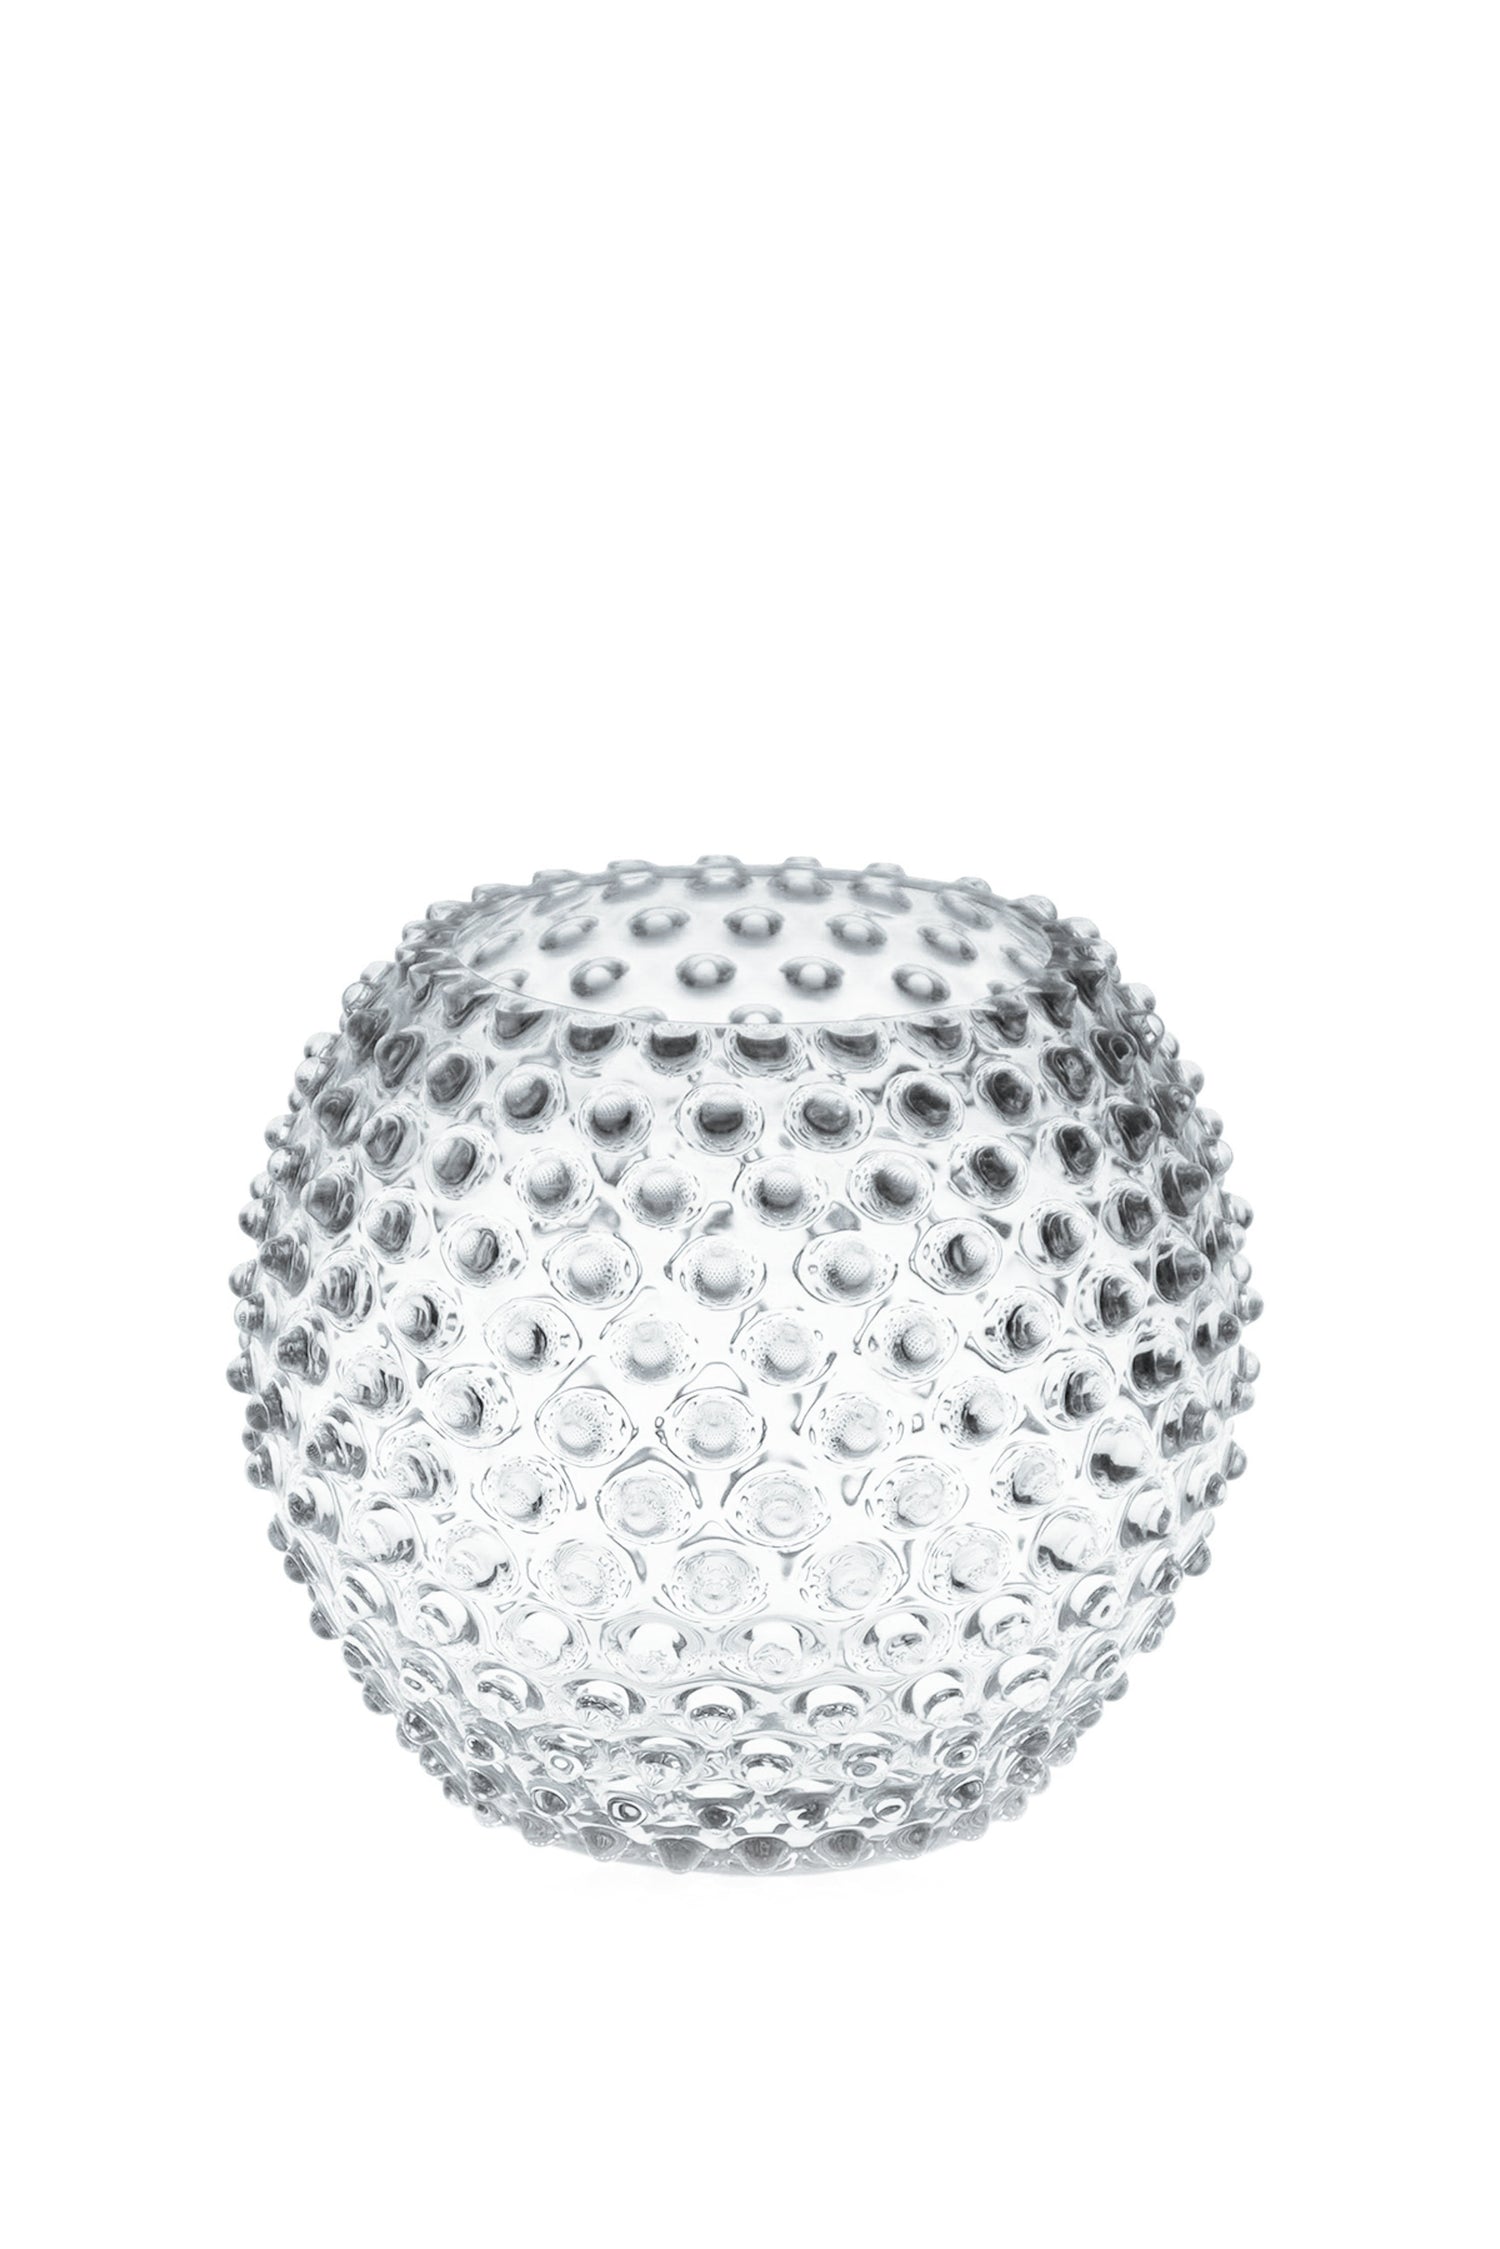 Hobnail Globe vase small, clear crystal